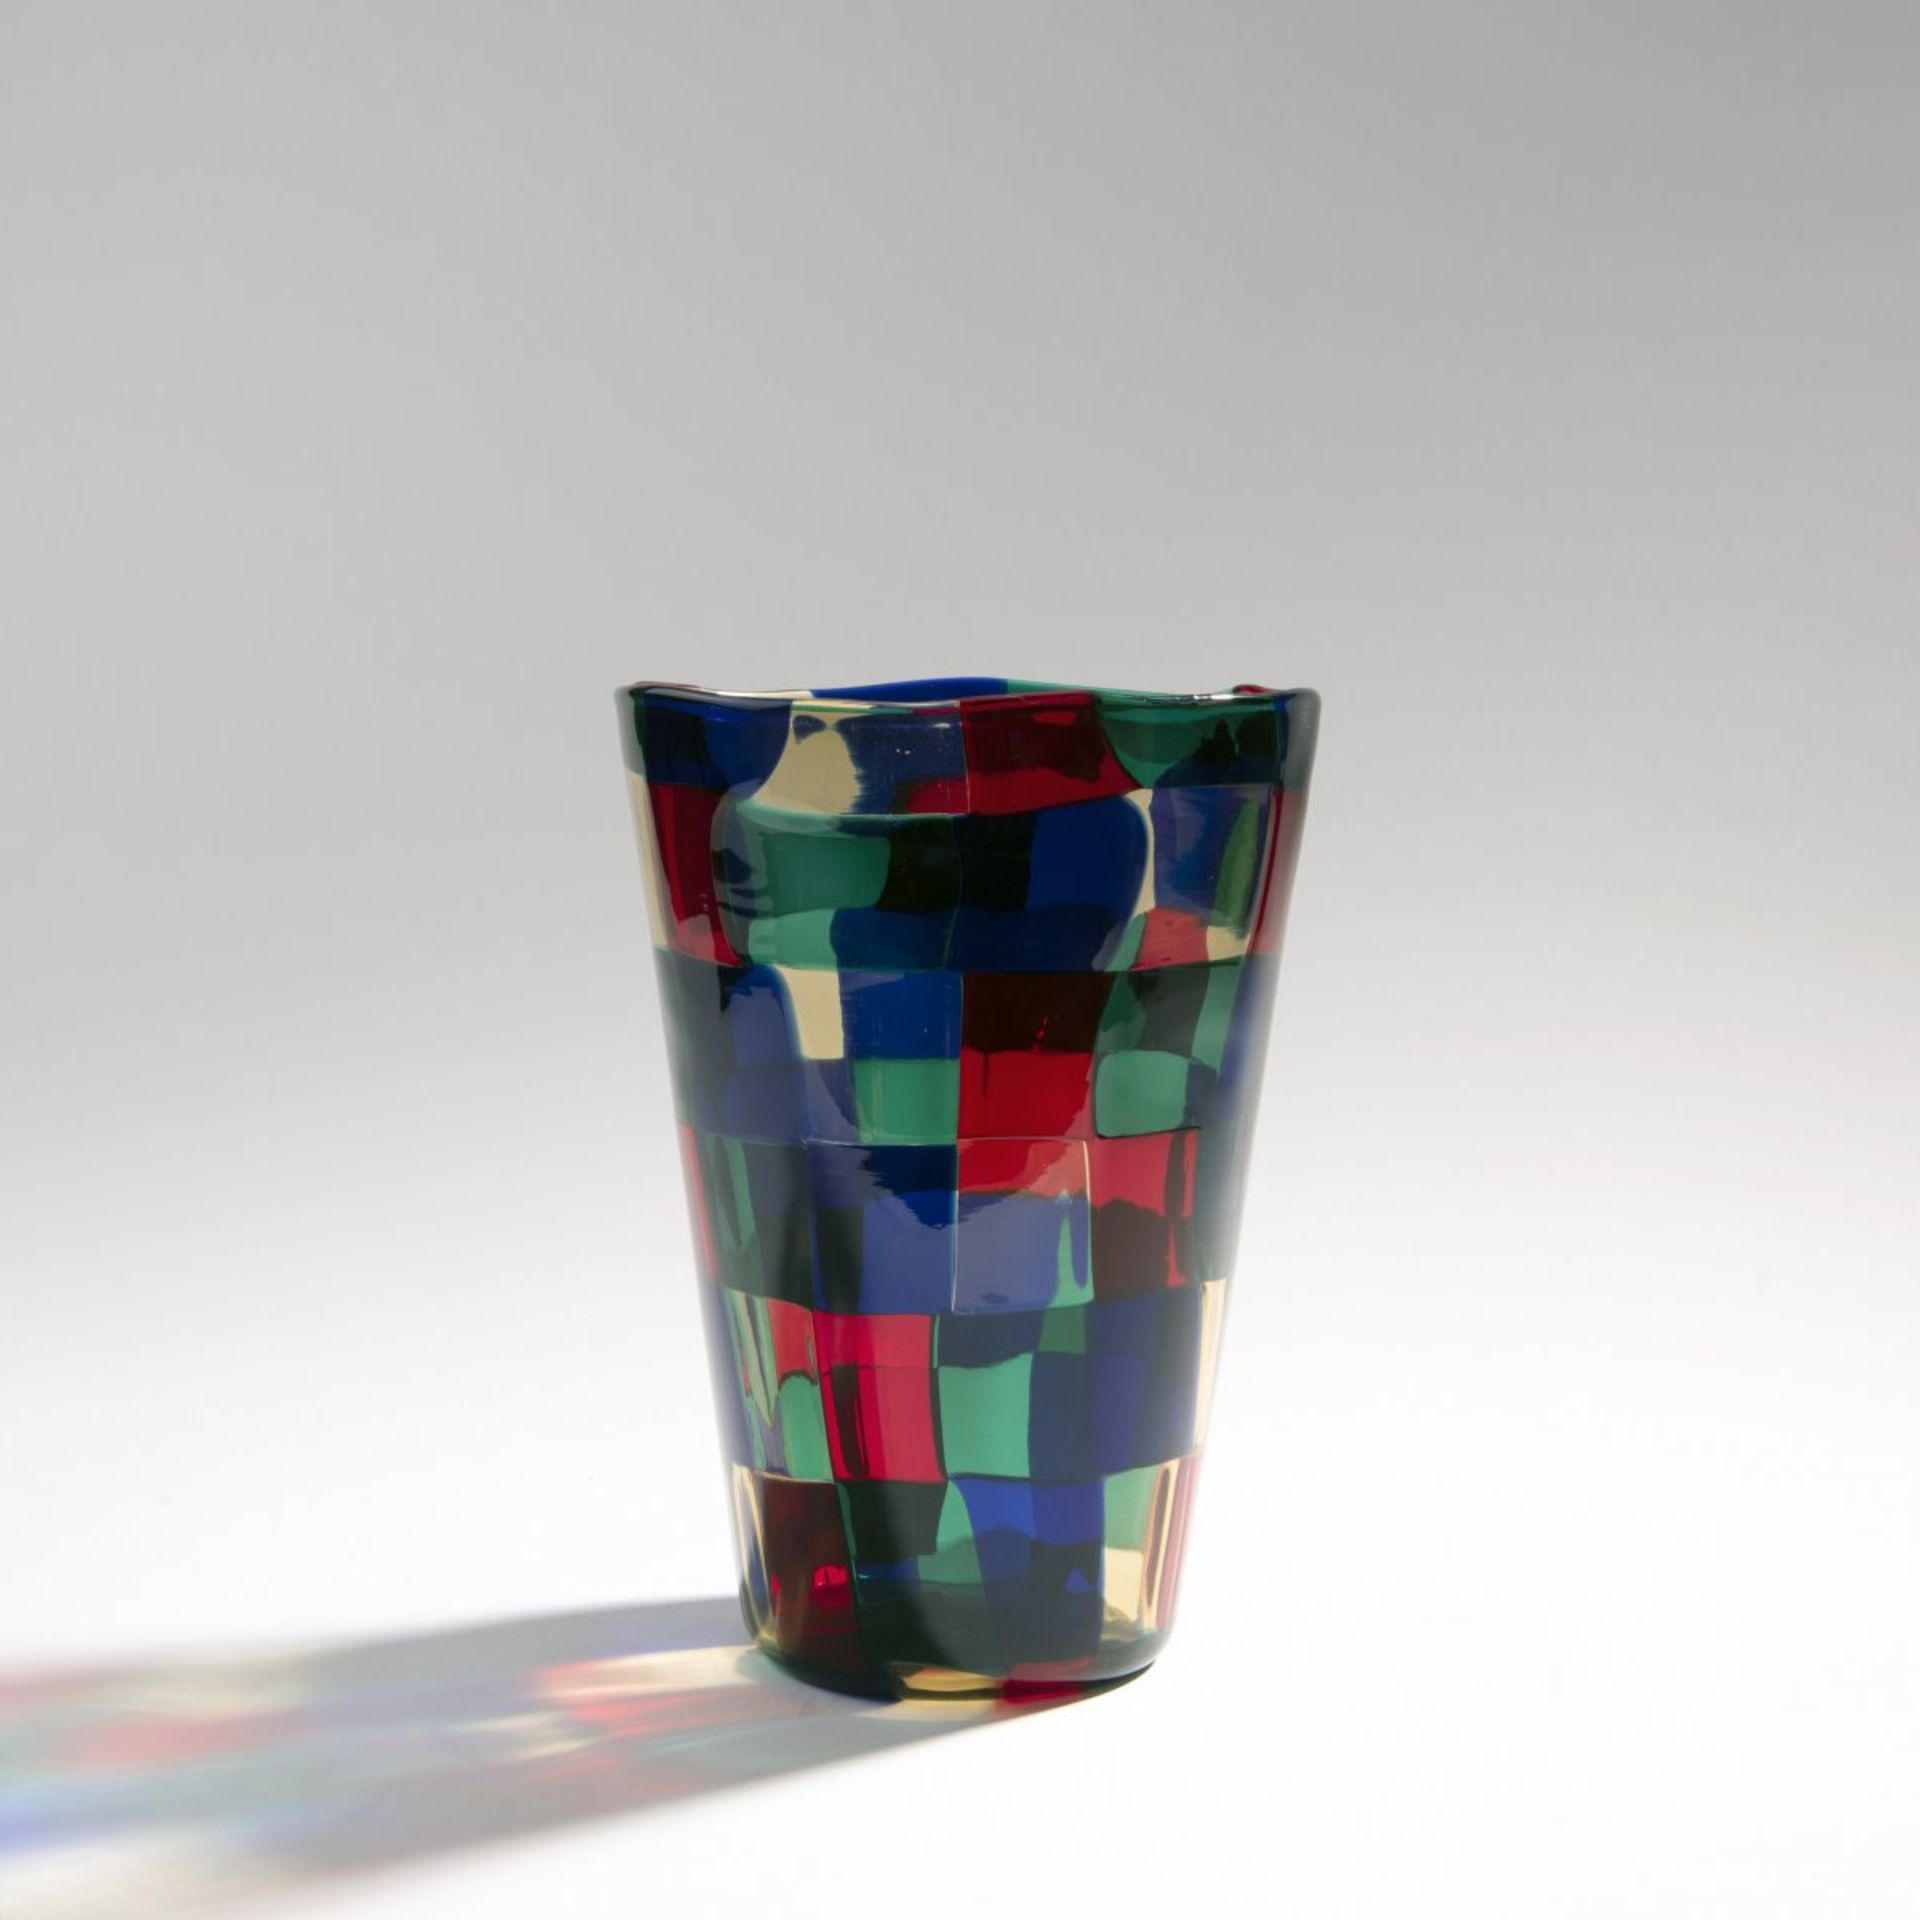 Fulvio BianconiVase 'Pezzato', 2002Becherform. H. 23 cm. Ausführung: Venini & C. Farbloses Glas